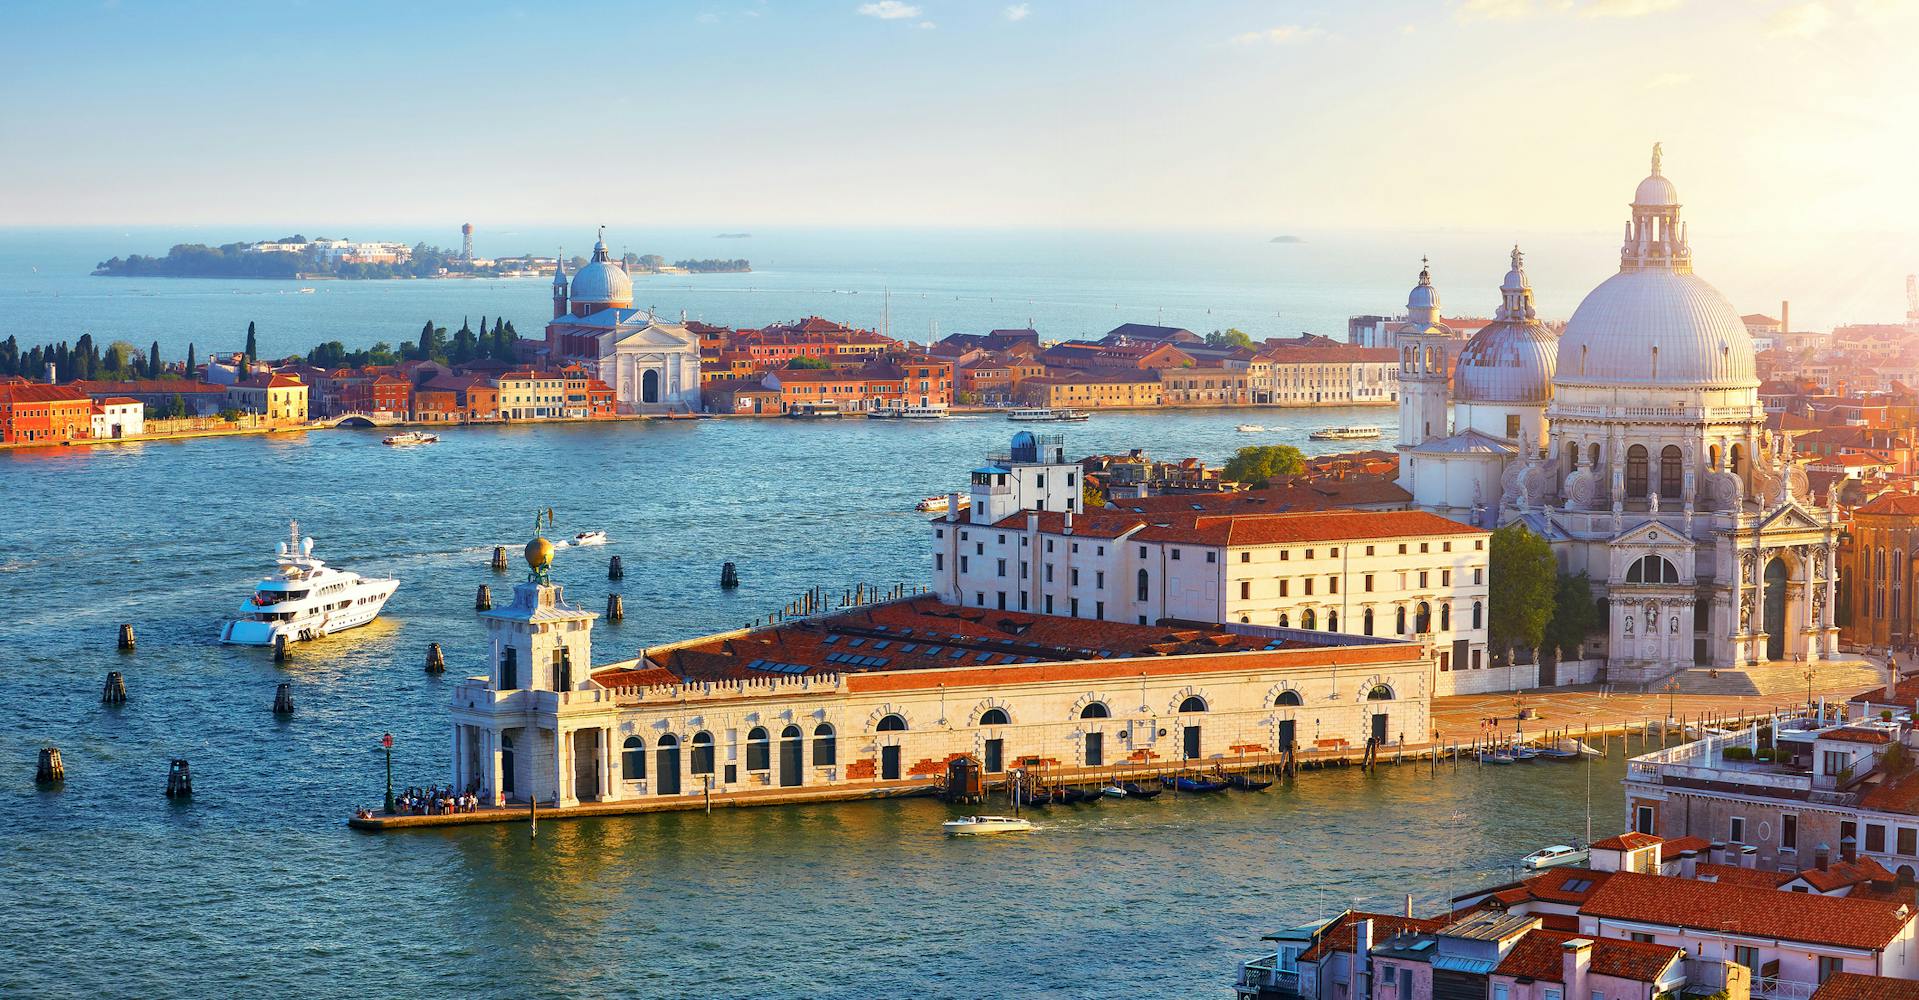 Cathedral of Santa Maria della Salute in Venice, Italy - ideal sailing destination